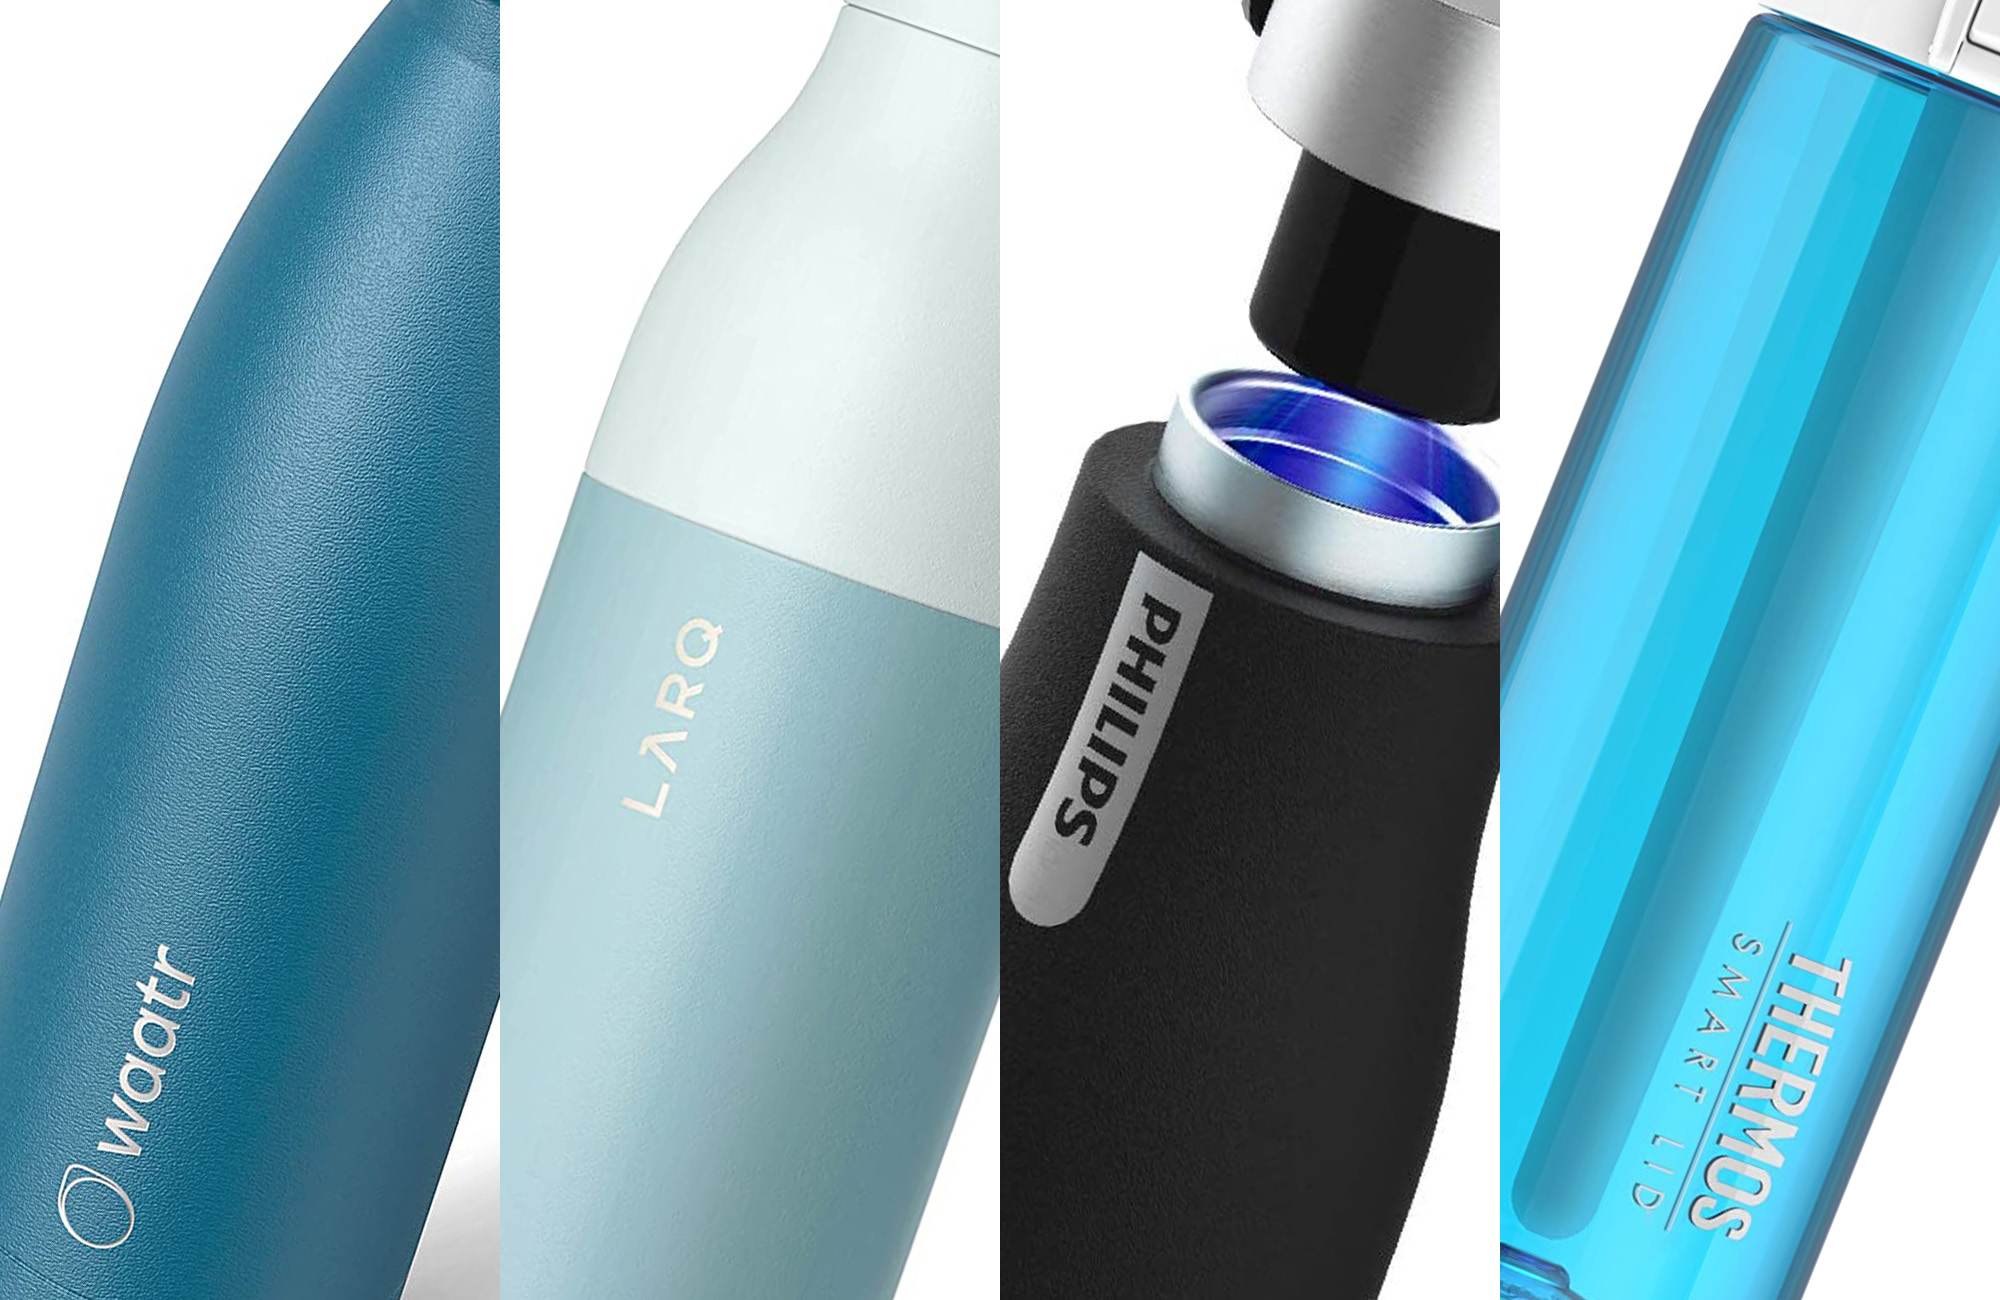 https://www.popsci.com/uploads/2023/06/16/best-smart-water-bottles-header.jpg?auto=webp&width=1440&height=936